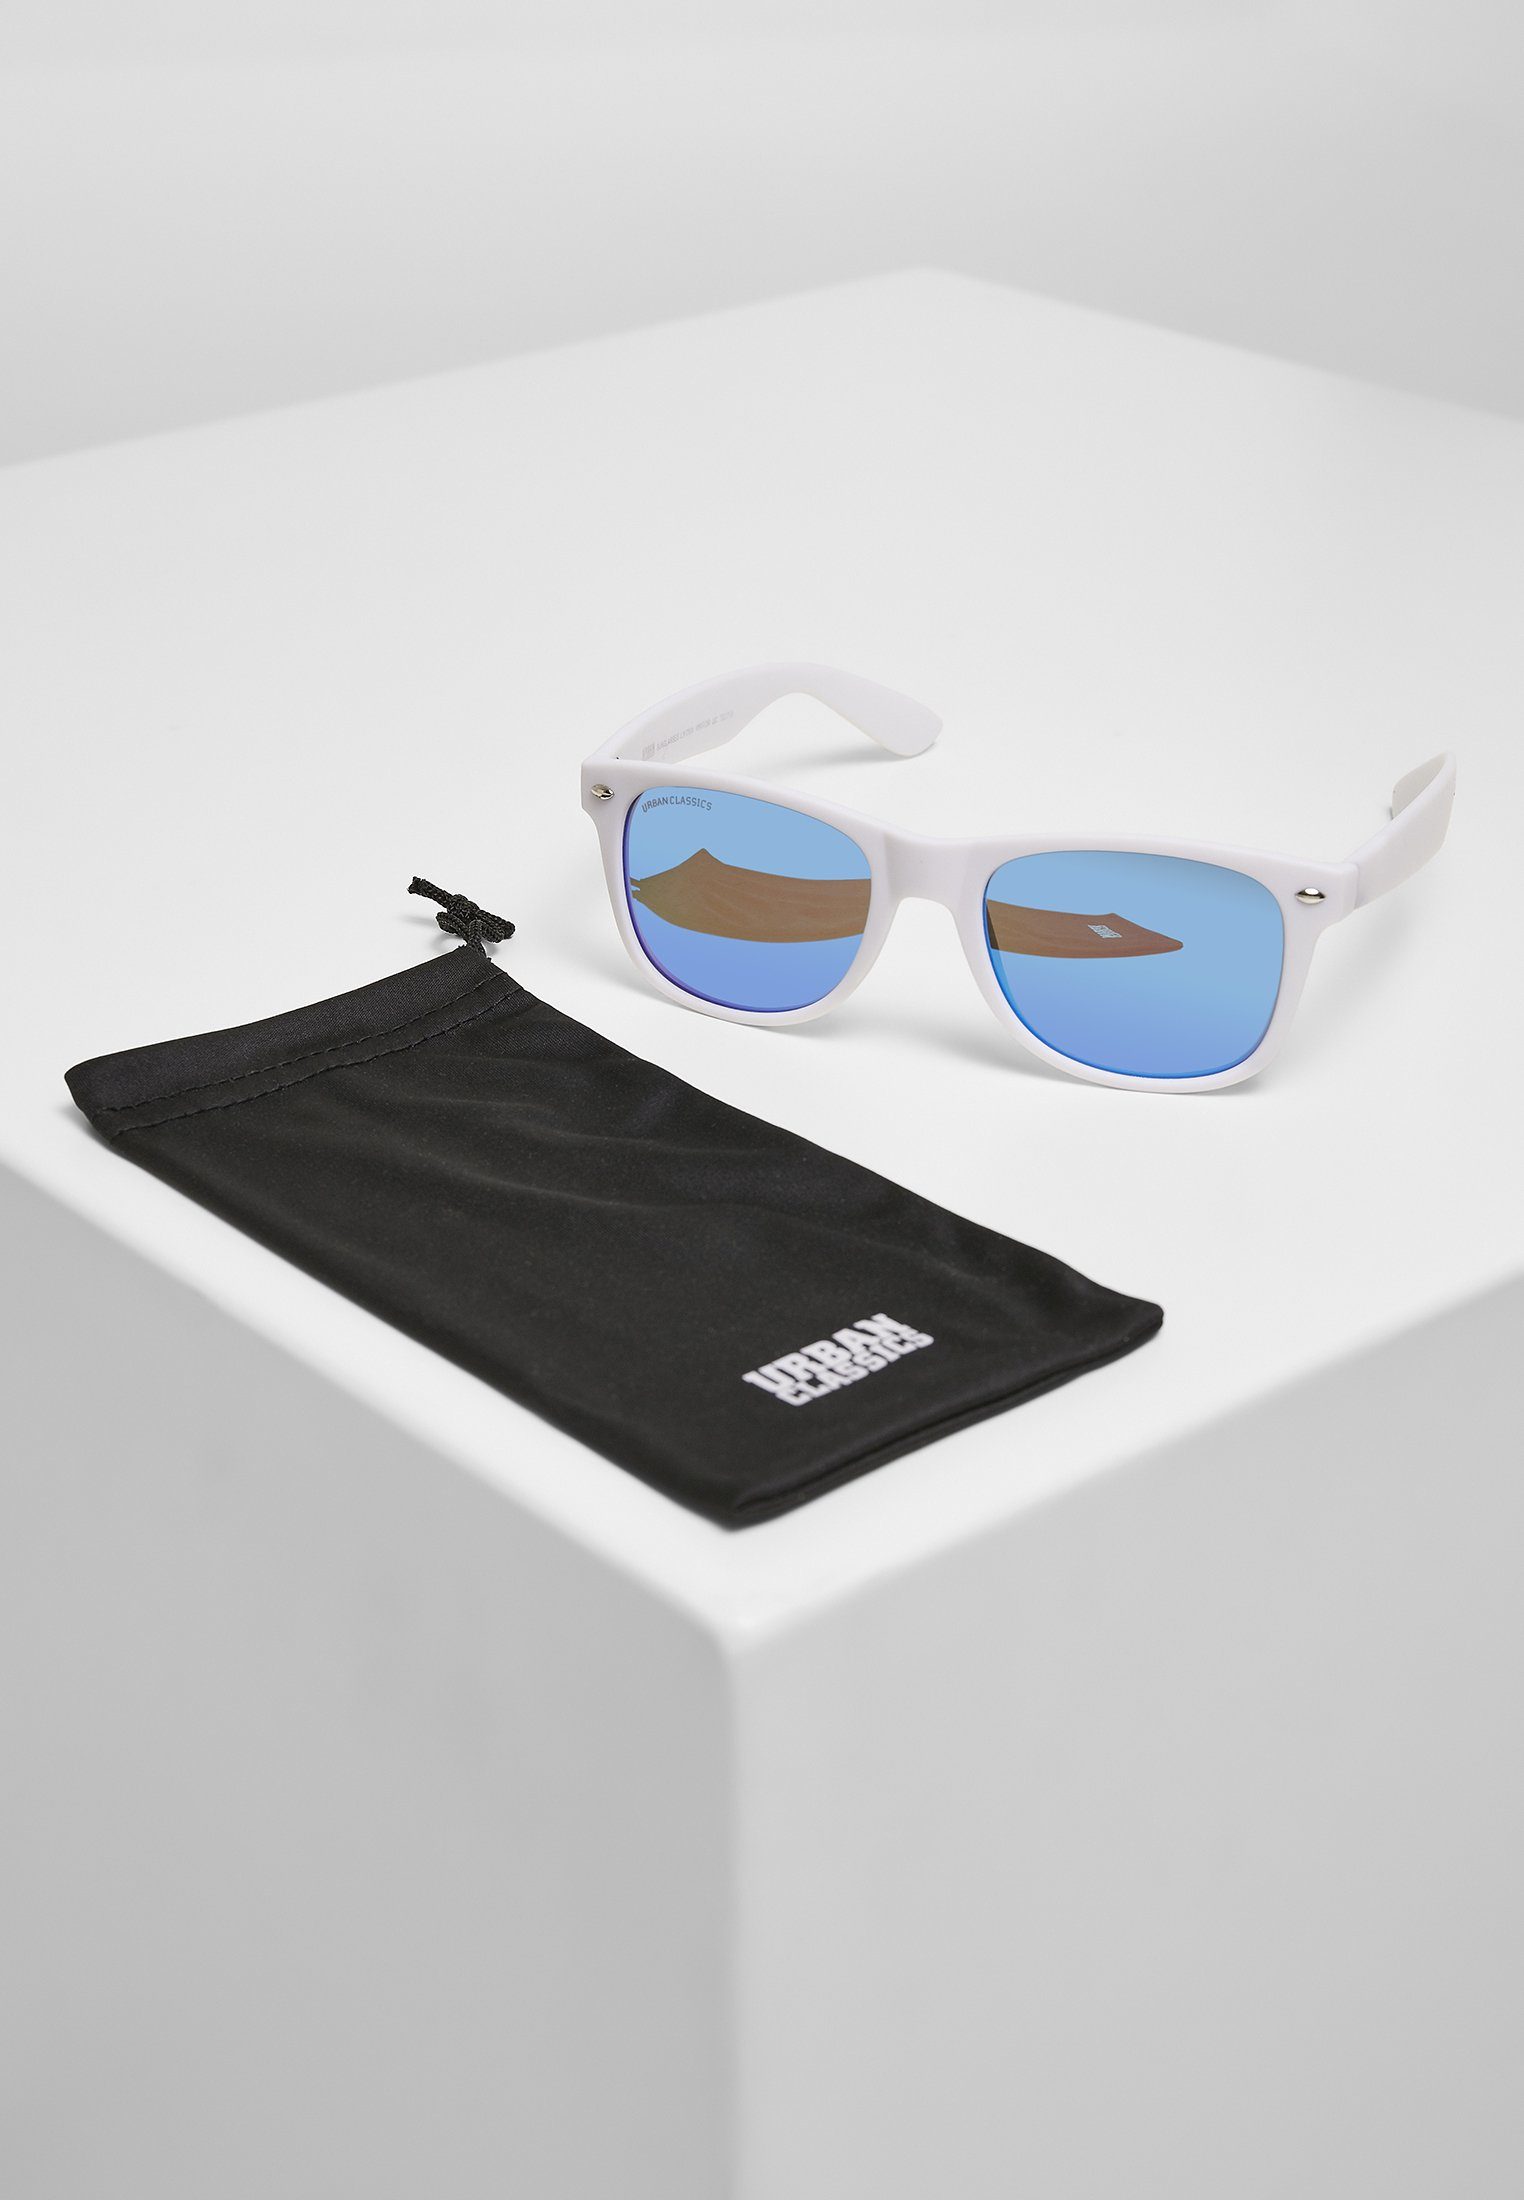 URBAN CLASSICS Accessoires Sonnenbrille UC white/blue Mirror Sunglasses Likoma